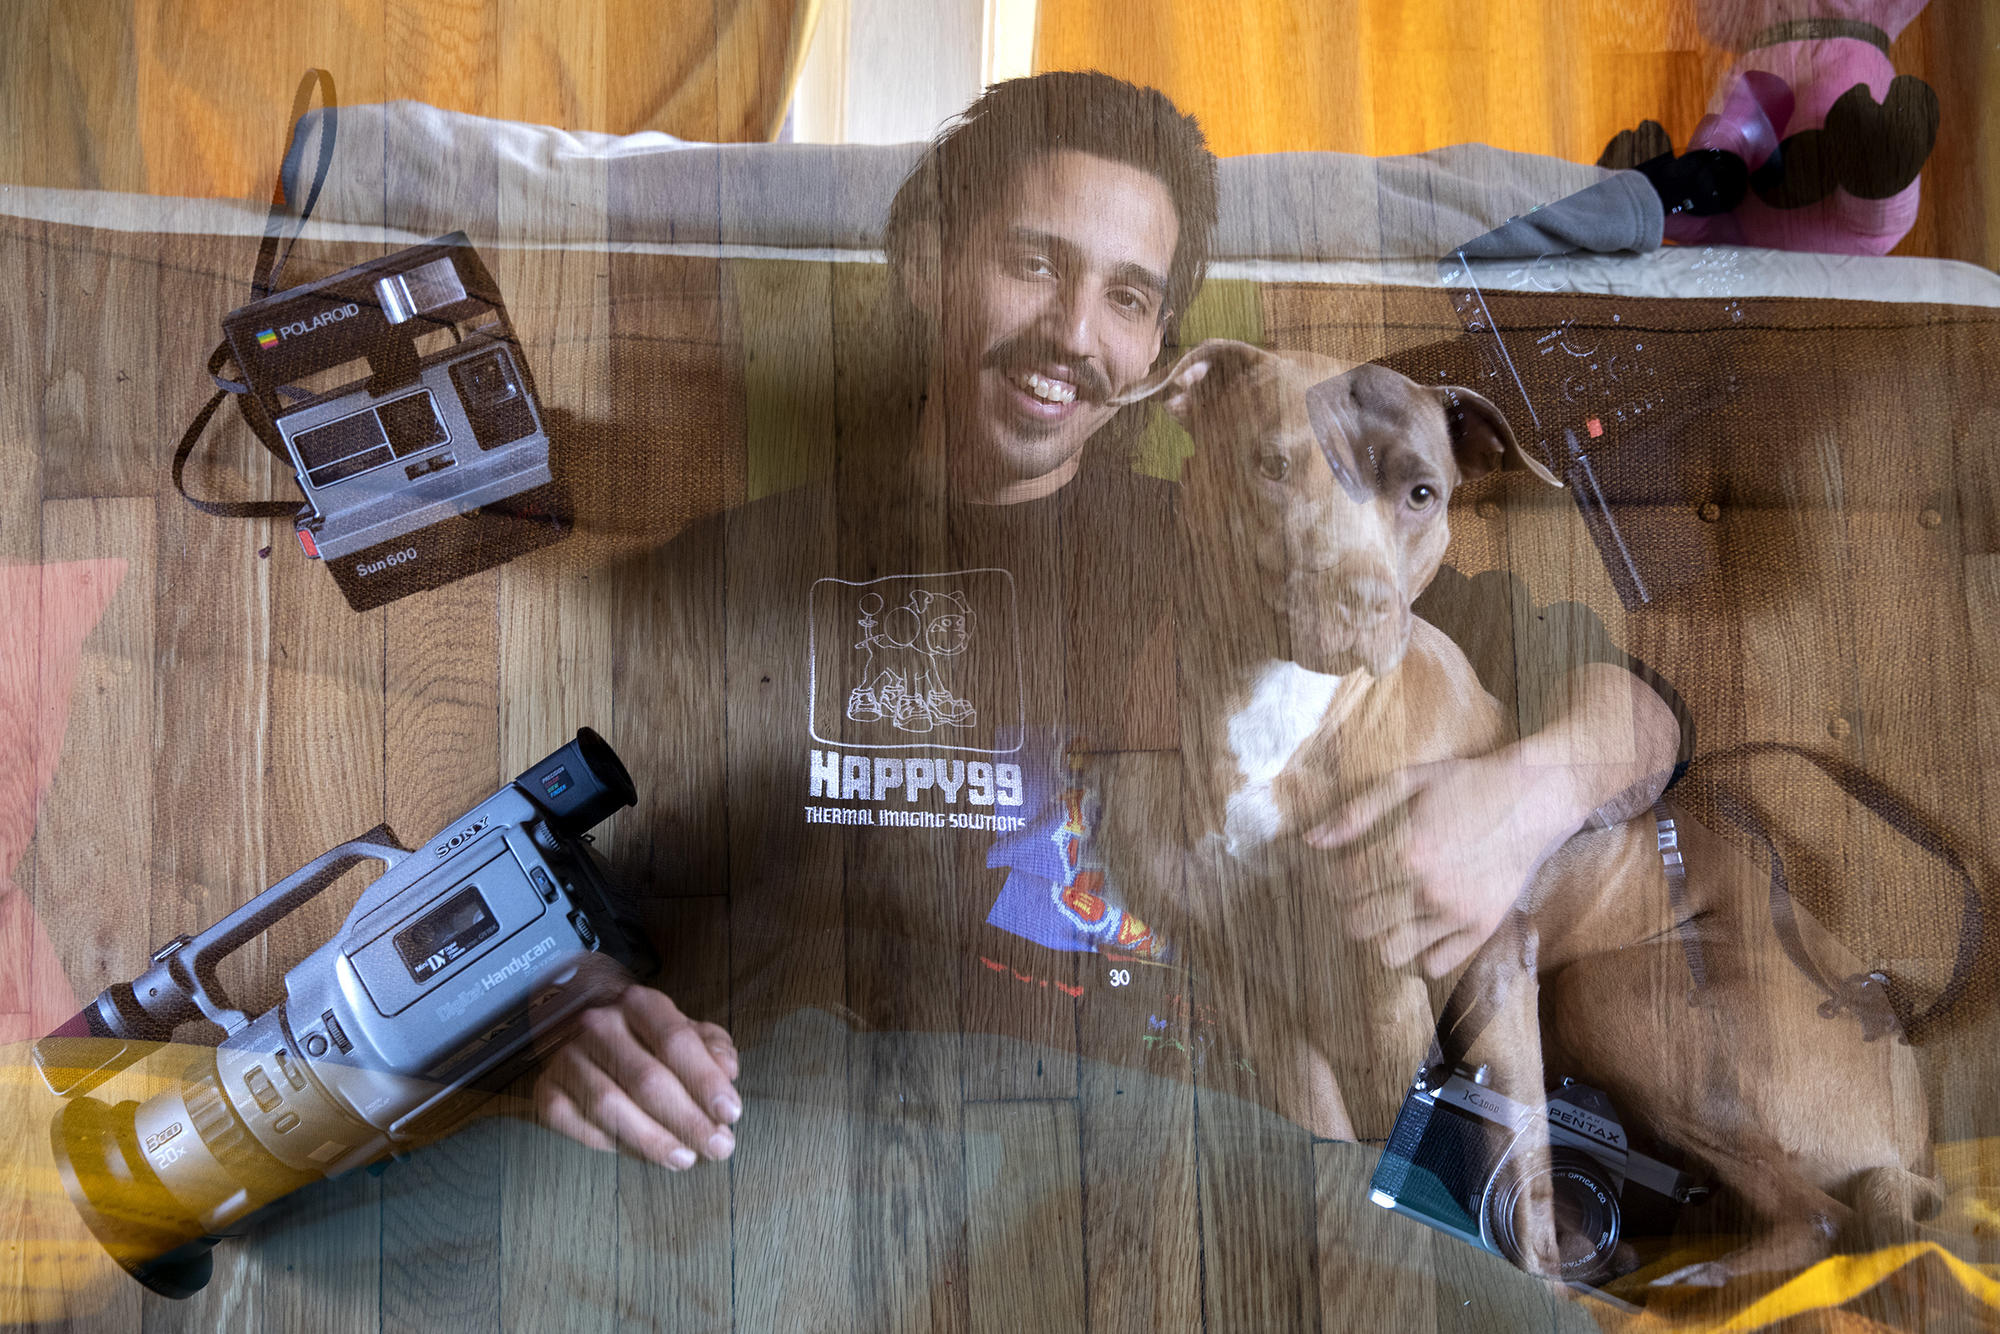 Leo Bañuelos with his dog